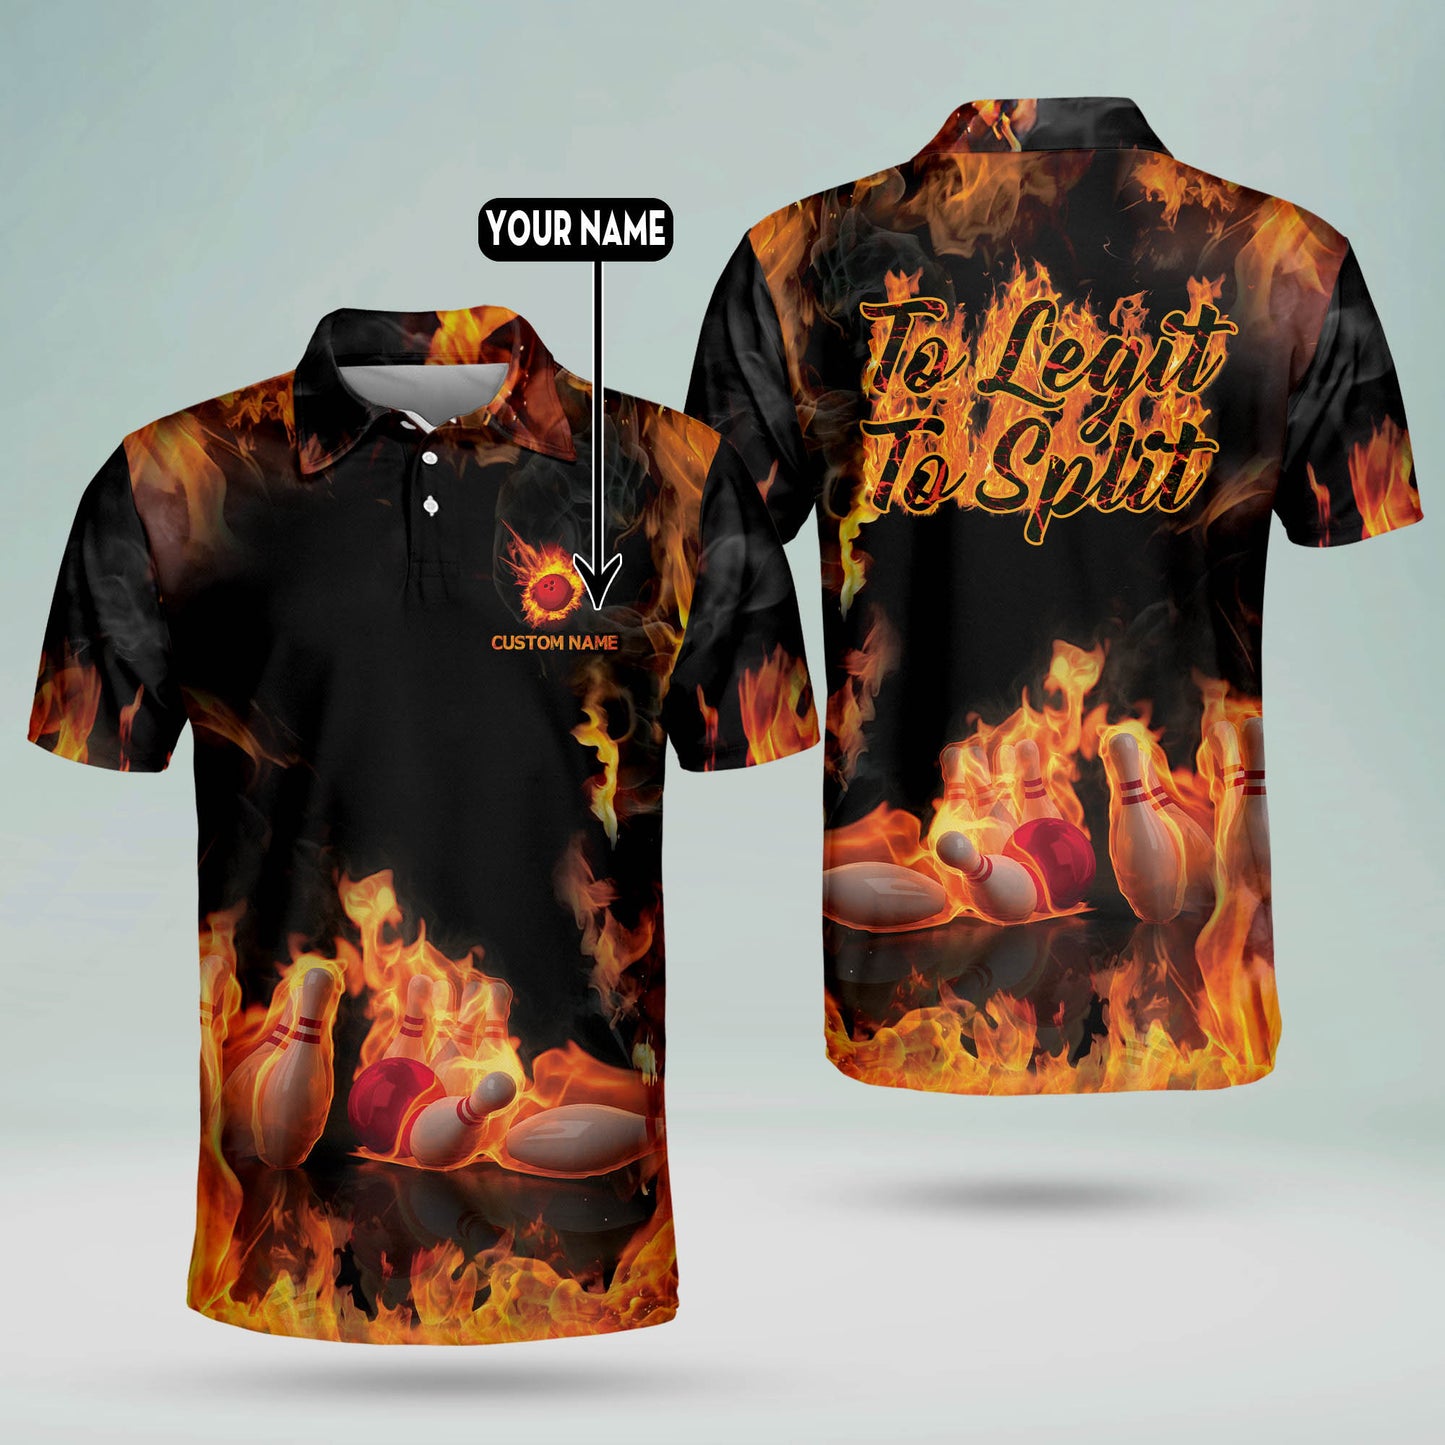 Custom Bowling Shirts For Men - Custom Designer Flame Bowling Shirts For Men - Personalized Crazy Yellow Fire Bowling Shirts Short Sleeve With Name BM0092